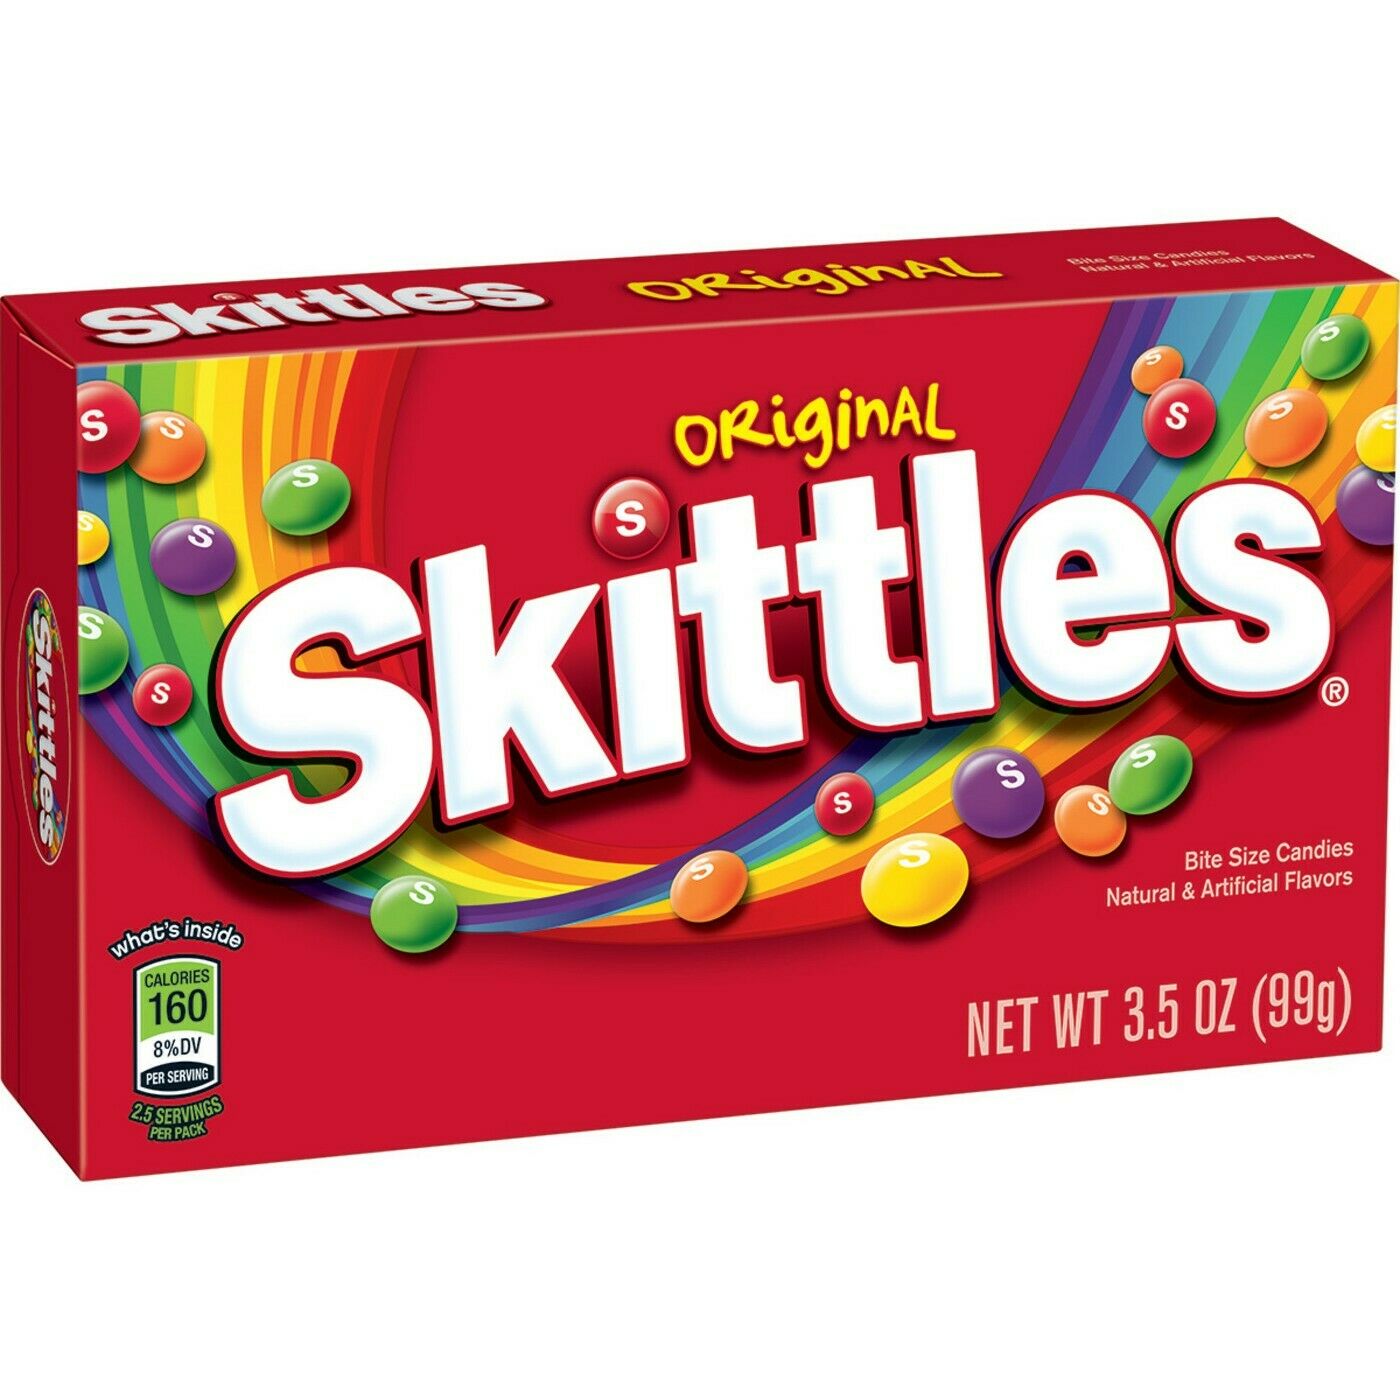 Skittles Original Bite Size Candies, Theater Box, 3.5oz